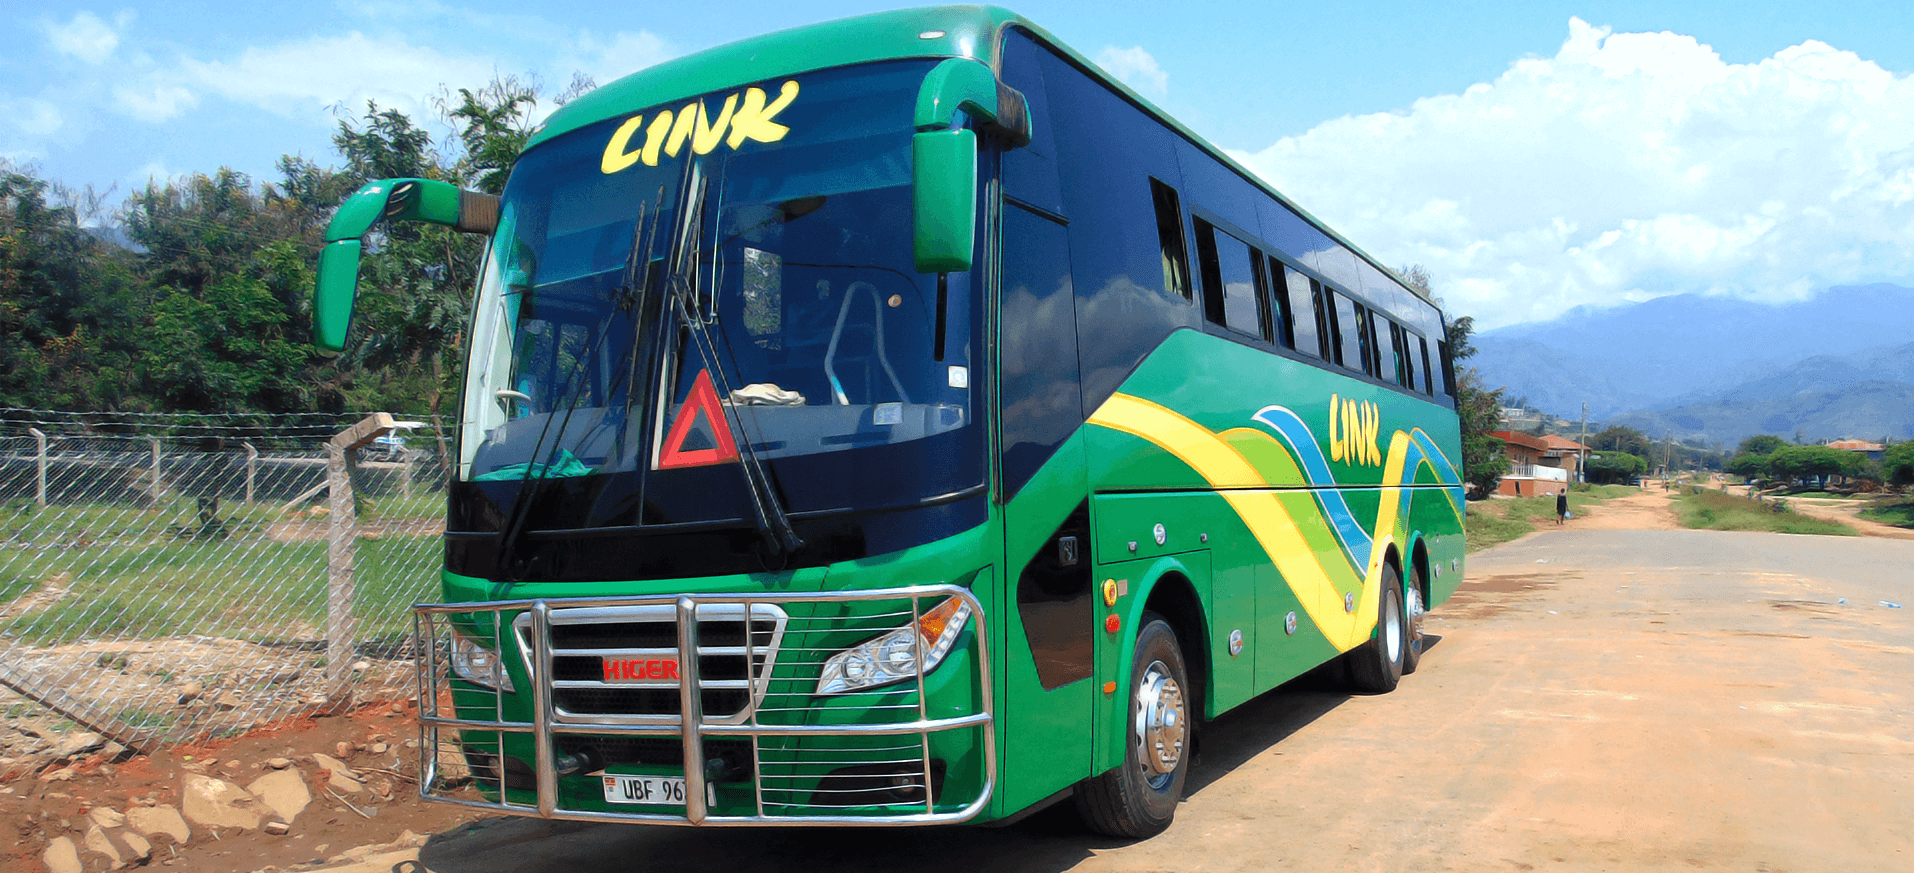 Link Bus Services